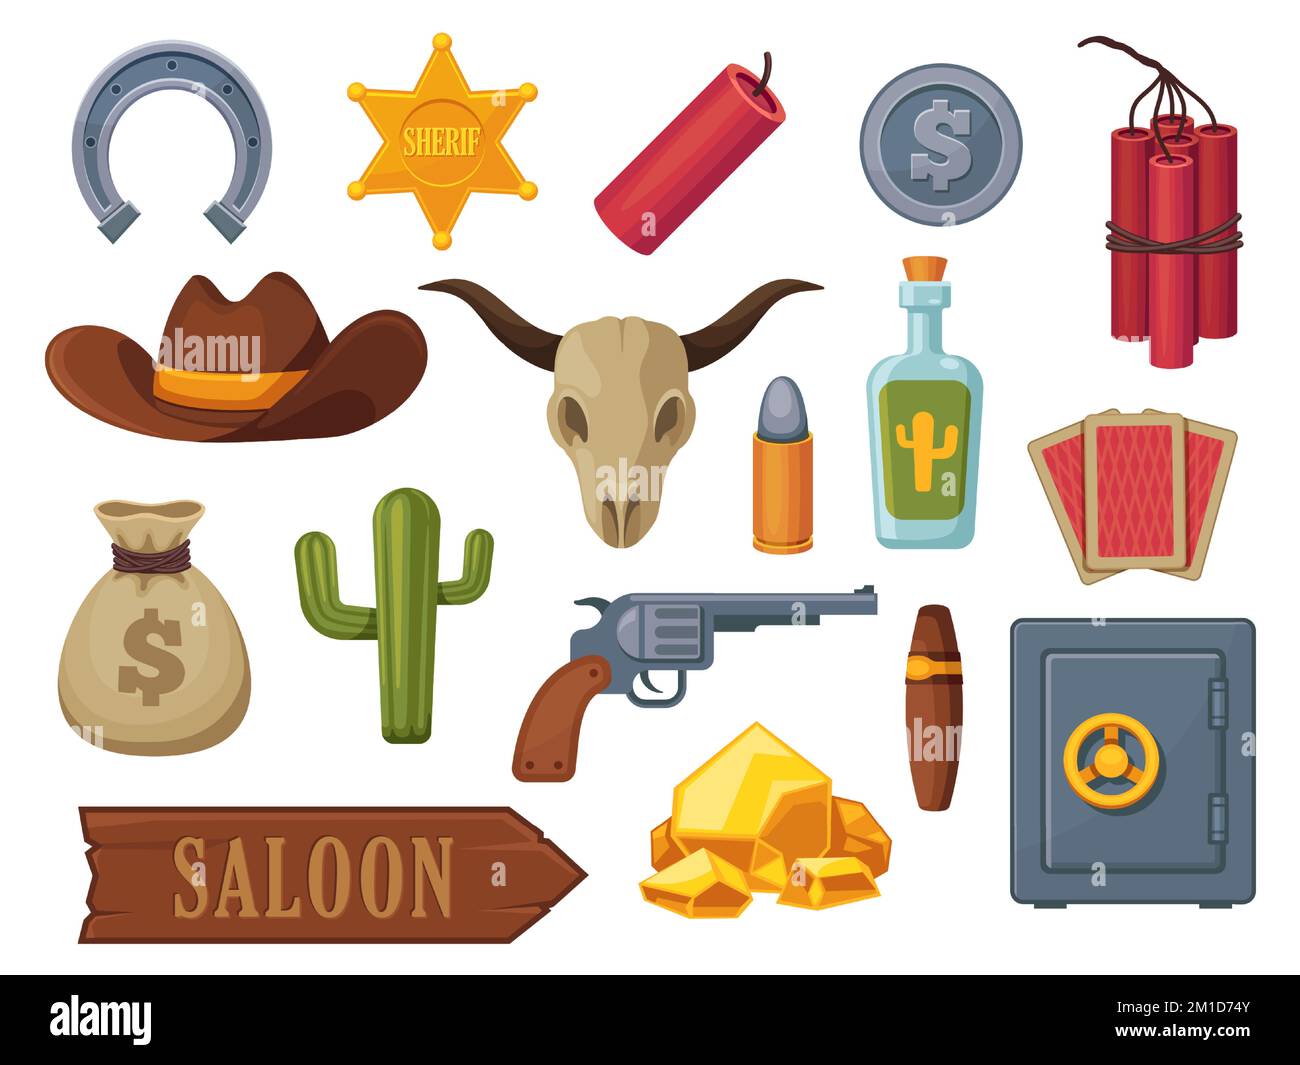 Cartoon wild west icons. Cowboy cactus rodeo saddle lasso guitar snake tequila horseshoe flat style, flat western elements. Vector colorful set Stock Vector